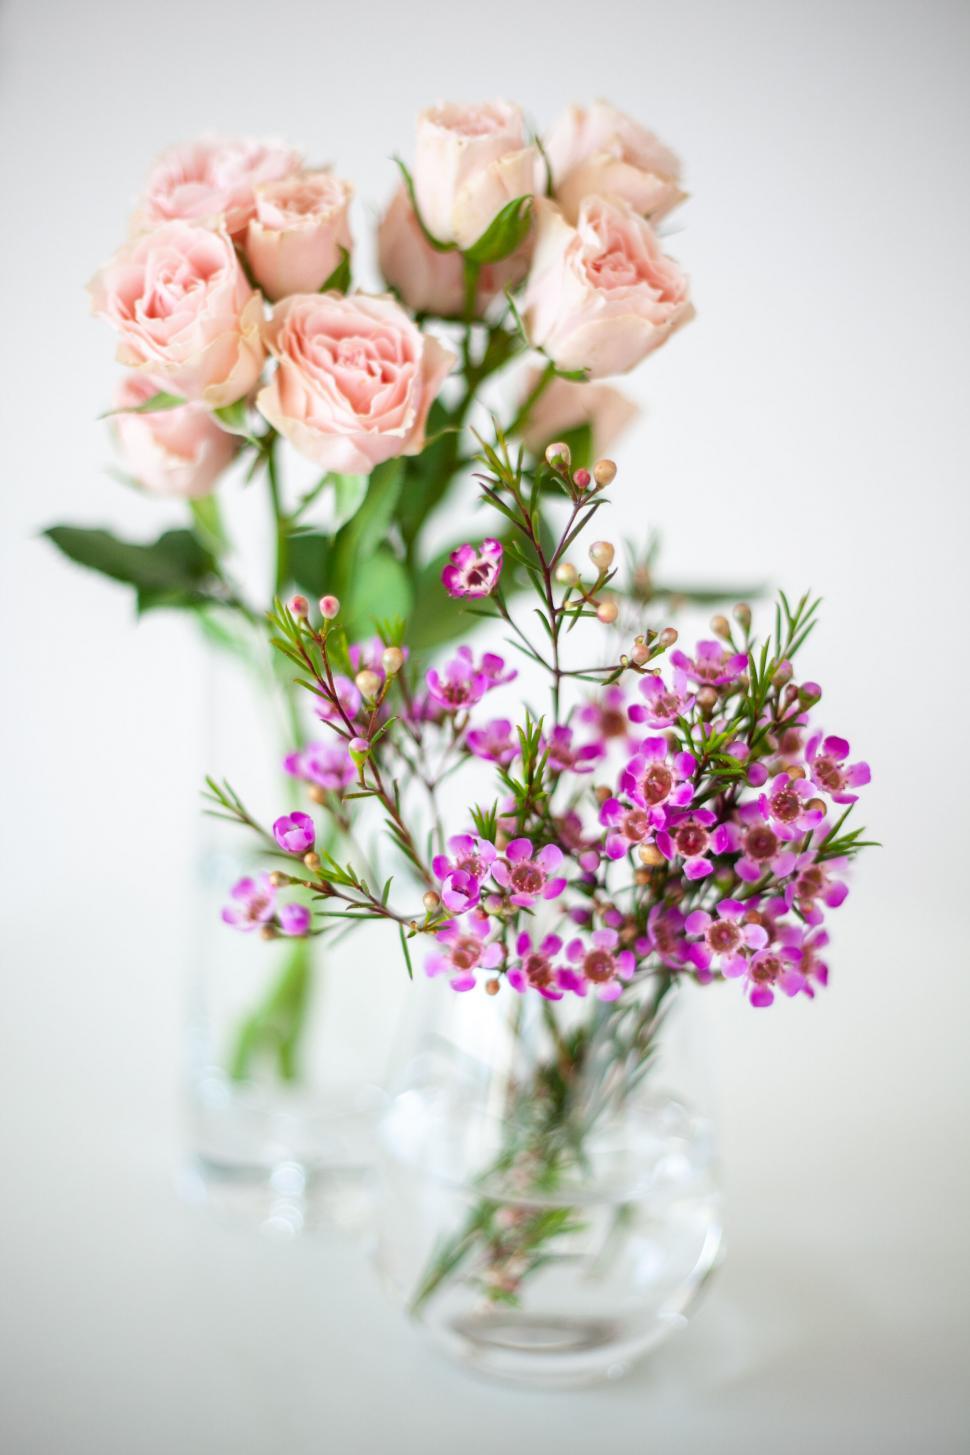 Free Image of Elegant Pink Roses in Glass Vases 